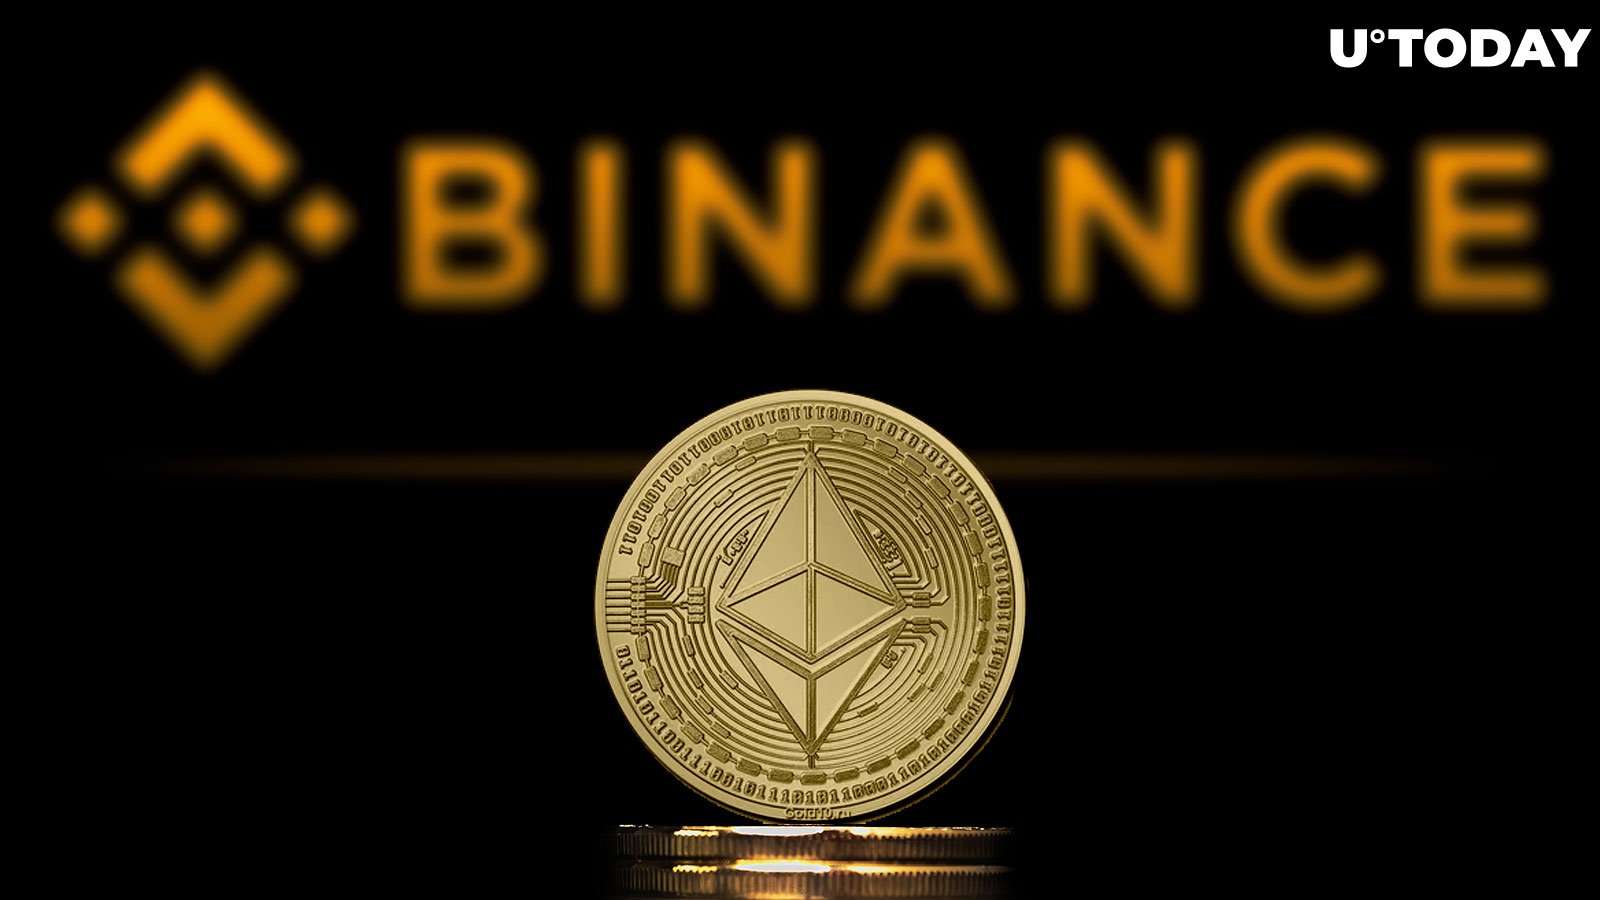 Binance Launches Zero-Fee Trading for Ethereum (ETH)